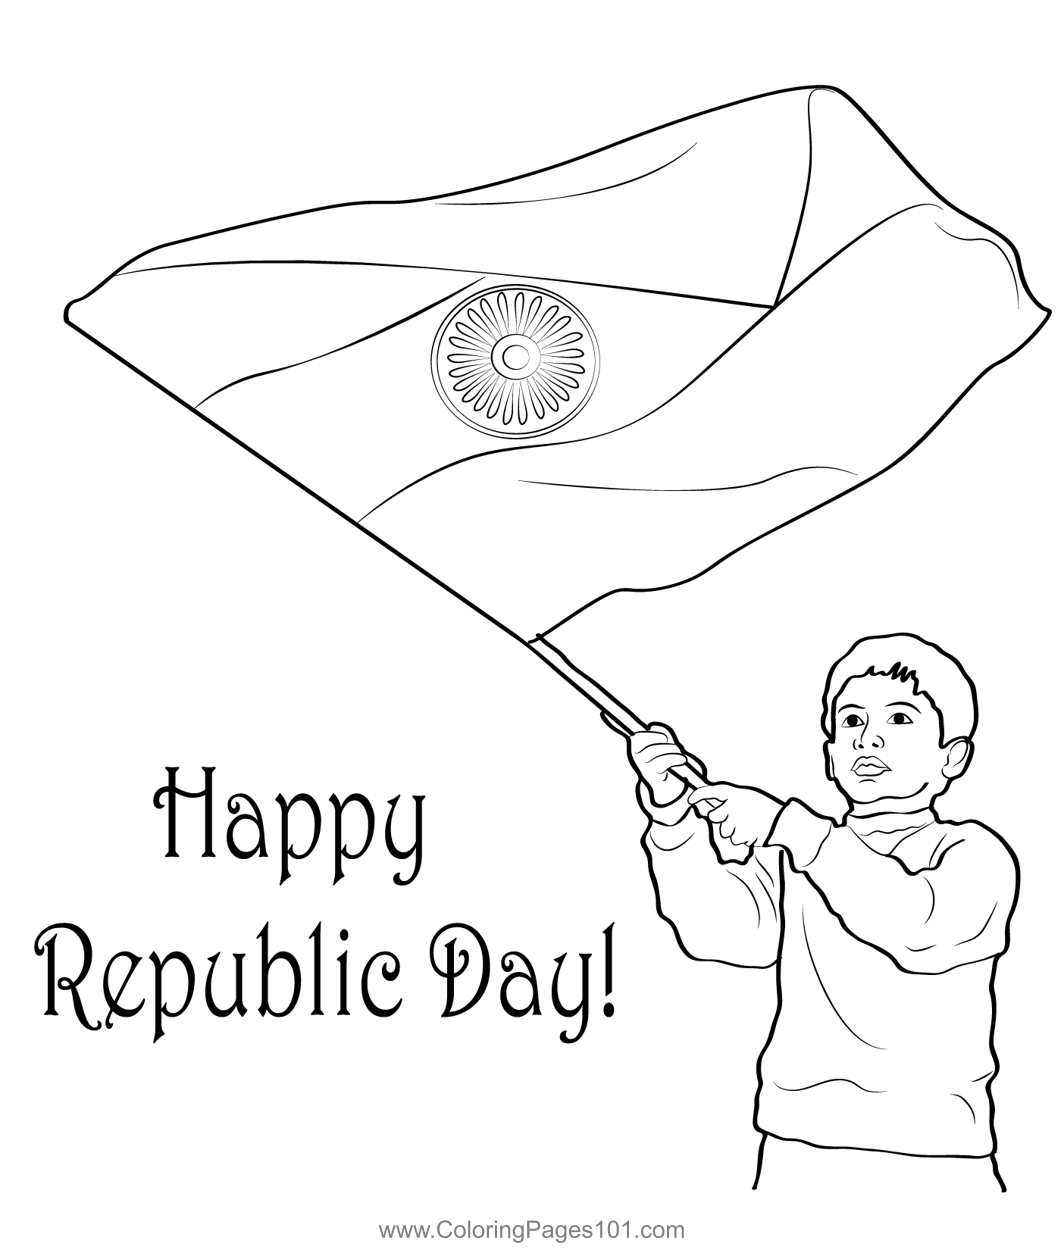 Republic Day Painting by Mrugakshi Shailesh Pedgaonkar